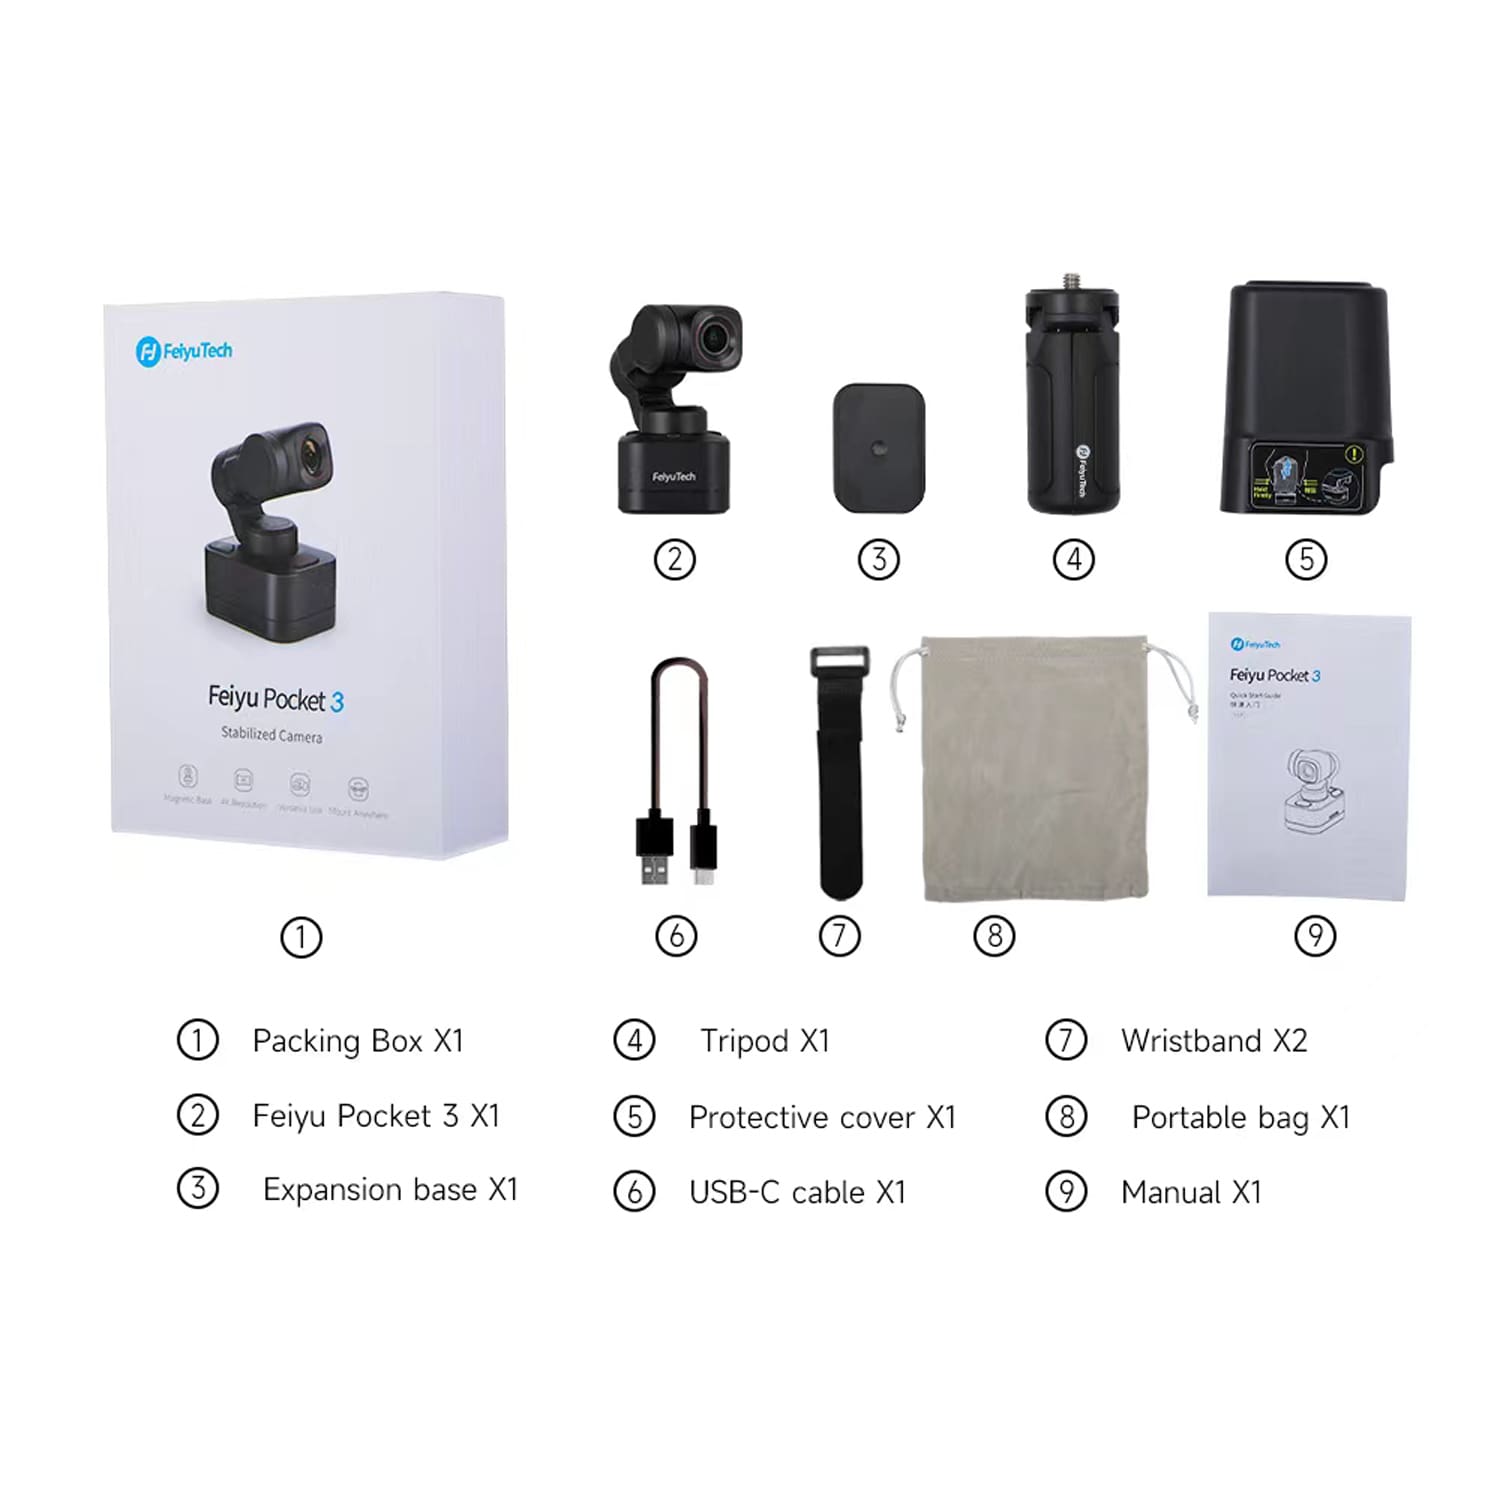 Feiyu pocket 3 camera packing list